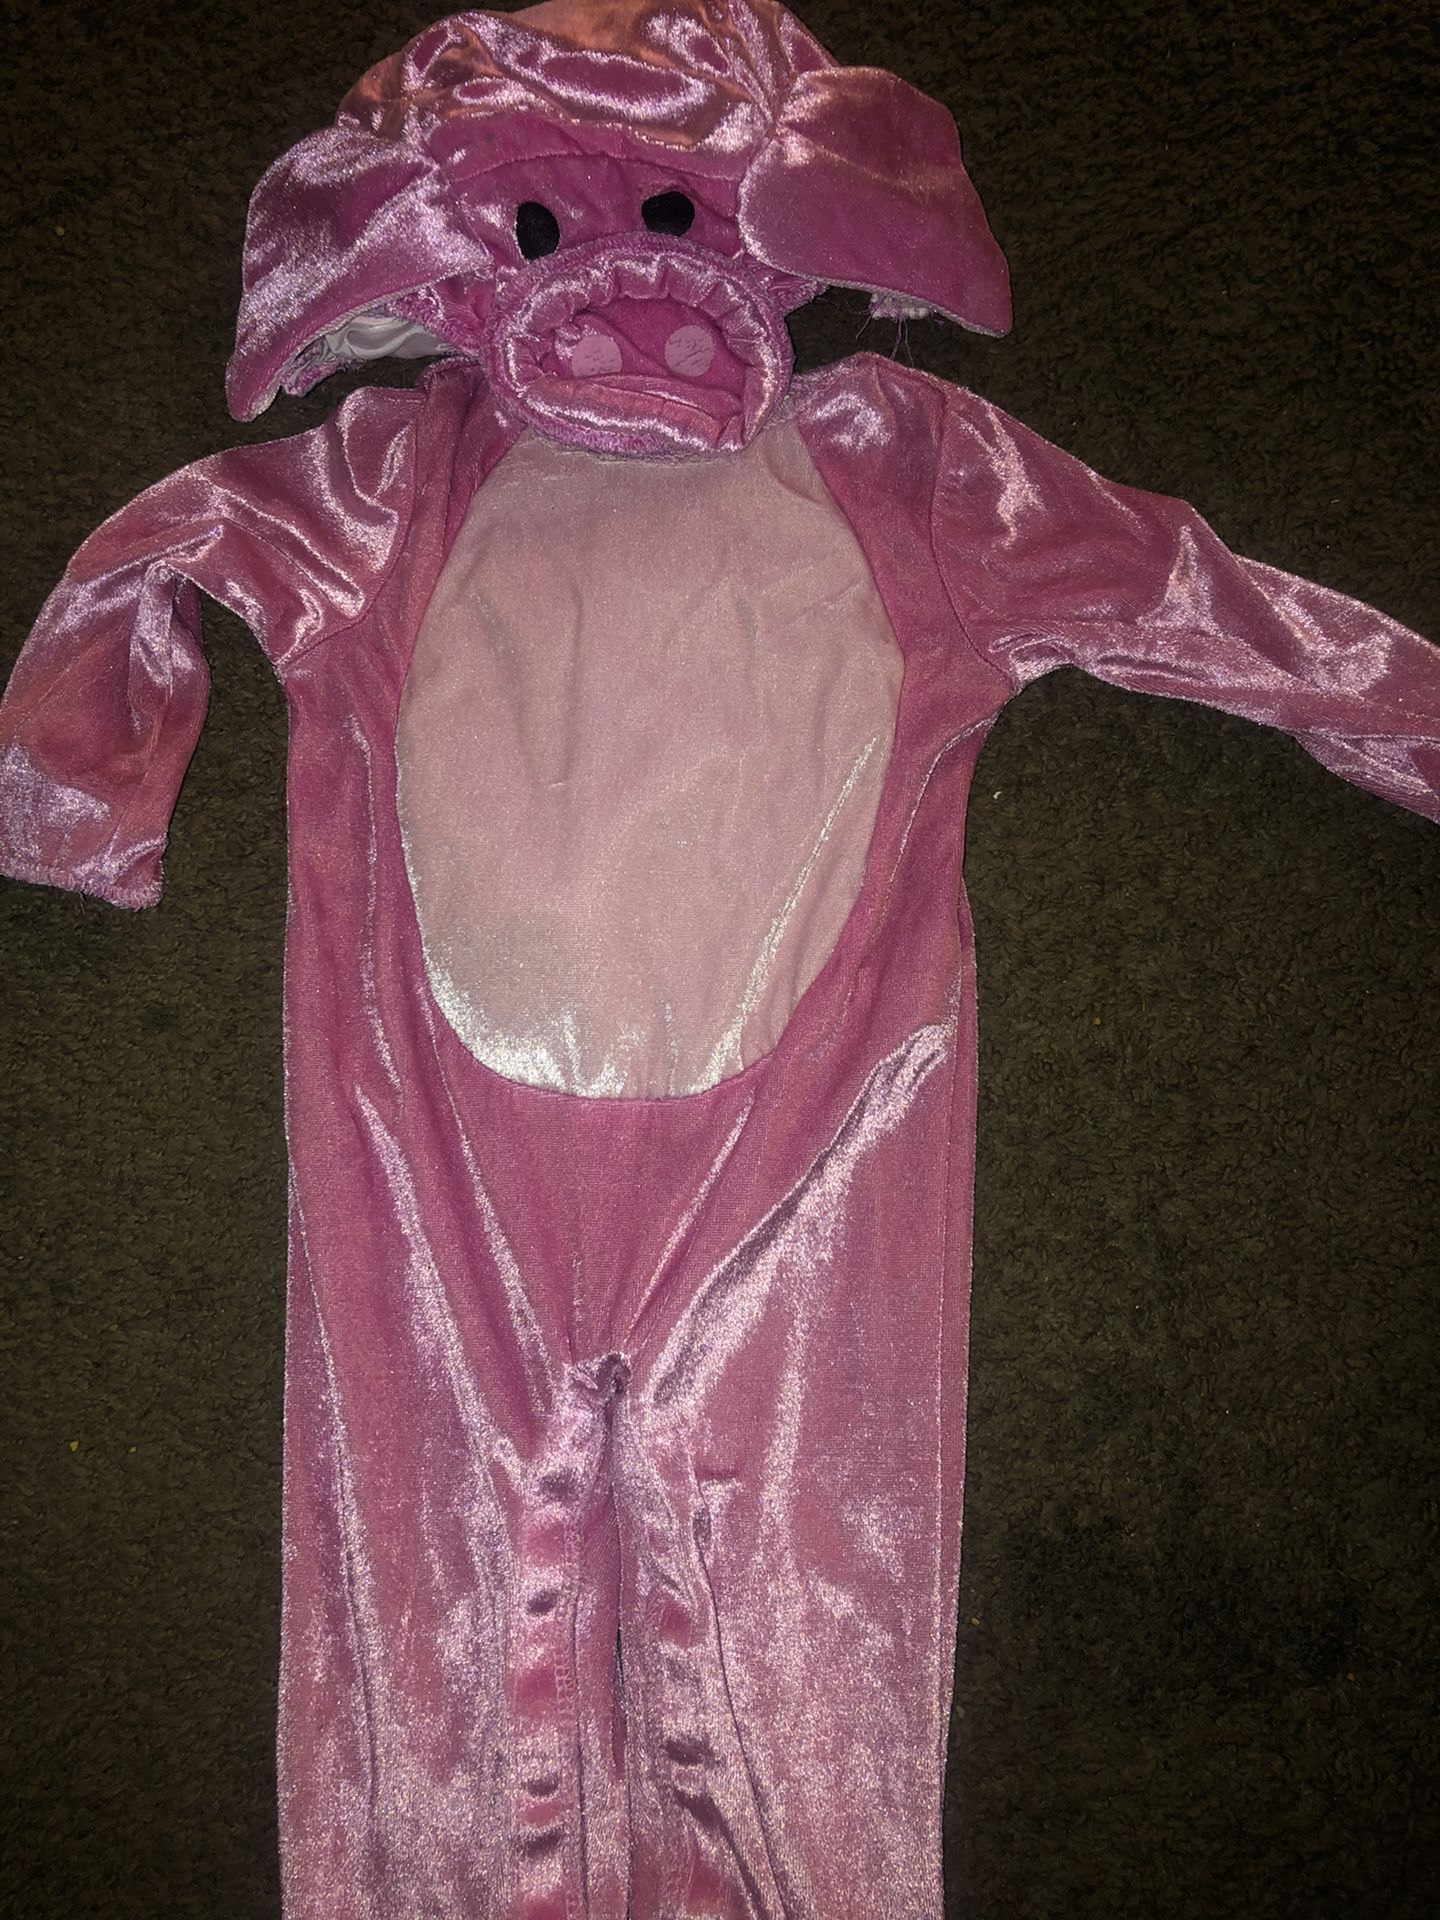 Piggy costume 6-12 months